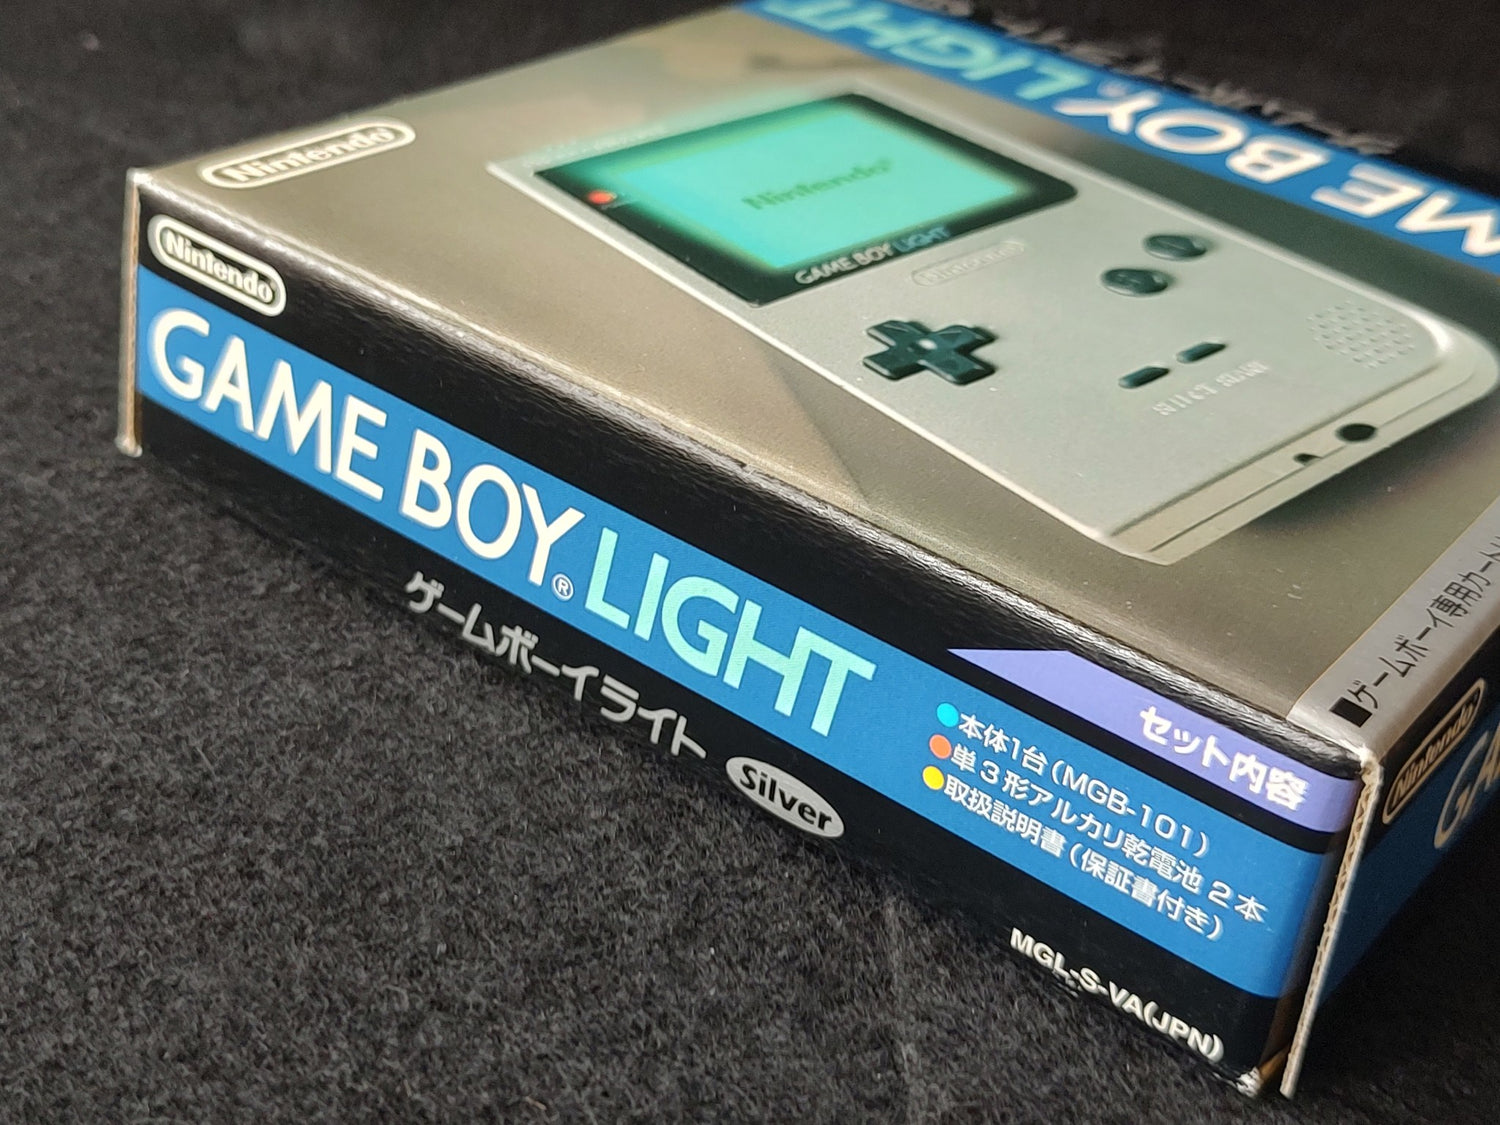 Nintendo Game boy Light Silver color console MGB-101, Manual, Boxed se